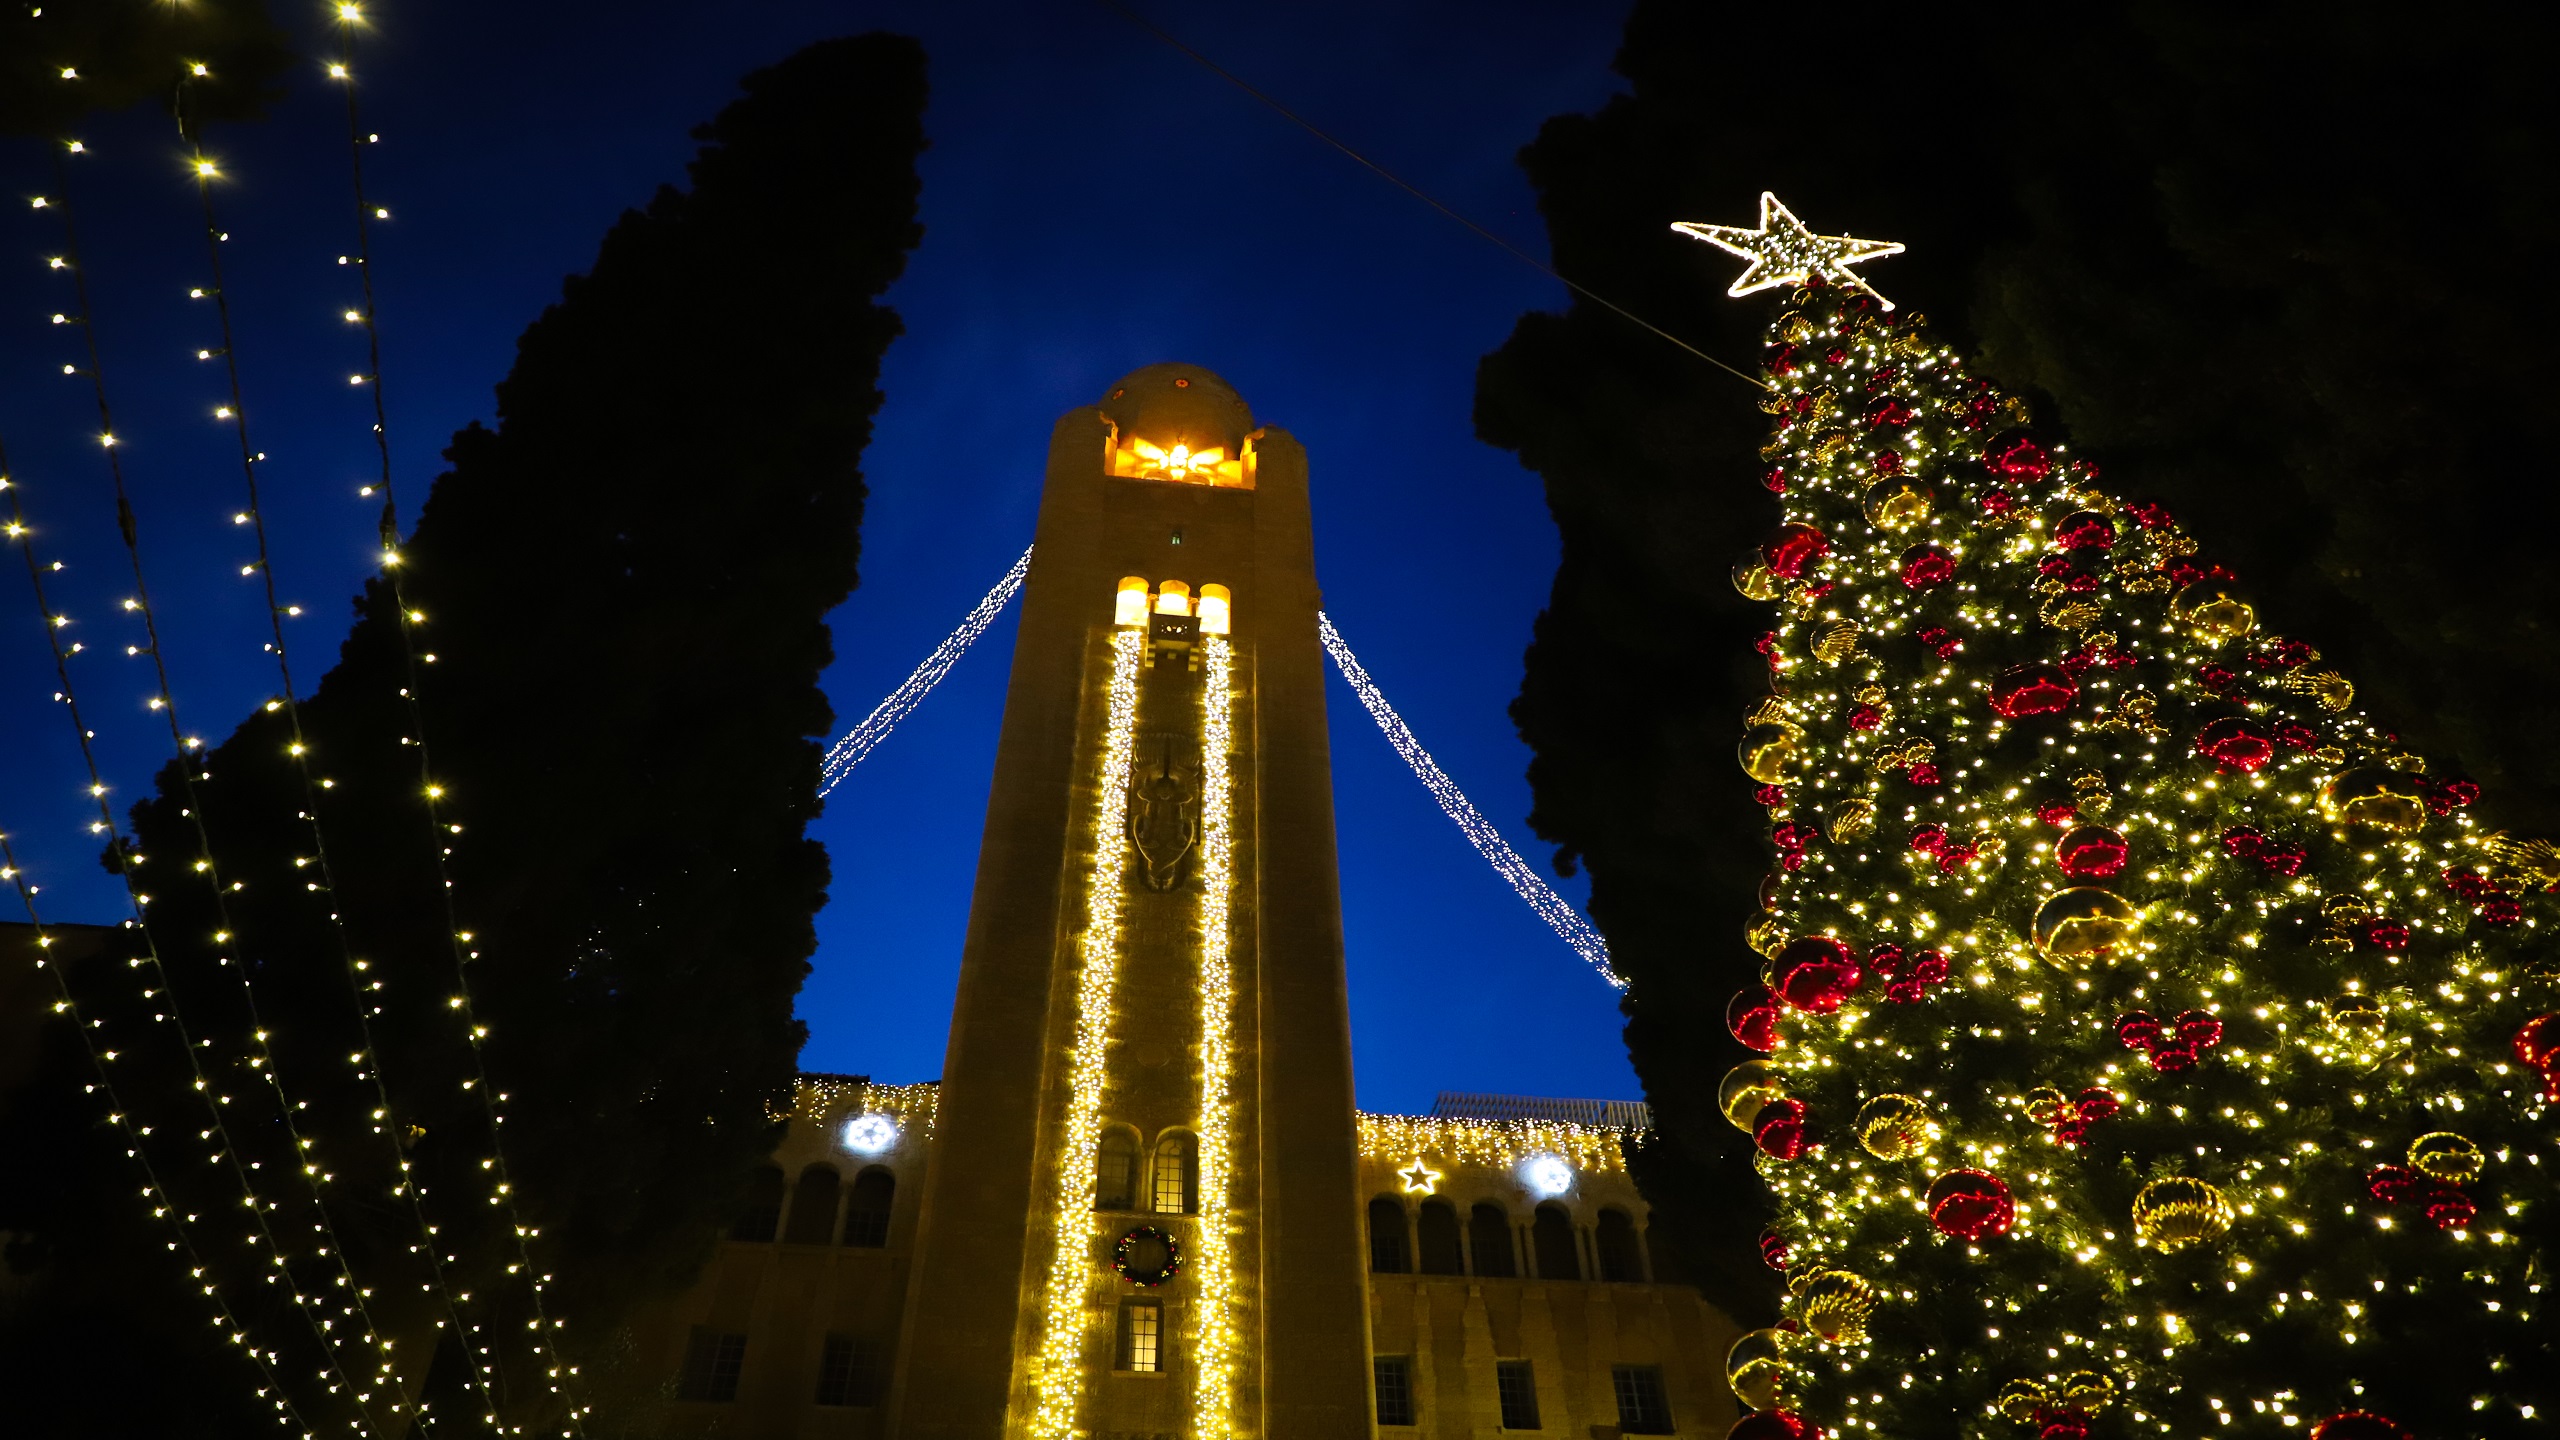 Jerusalem International YMCA Christmas Tree Lighting Ceremony and Reveal of the Tower Lighting